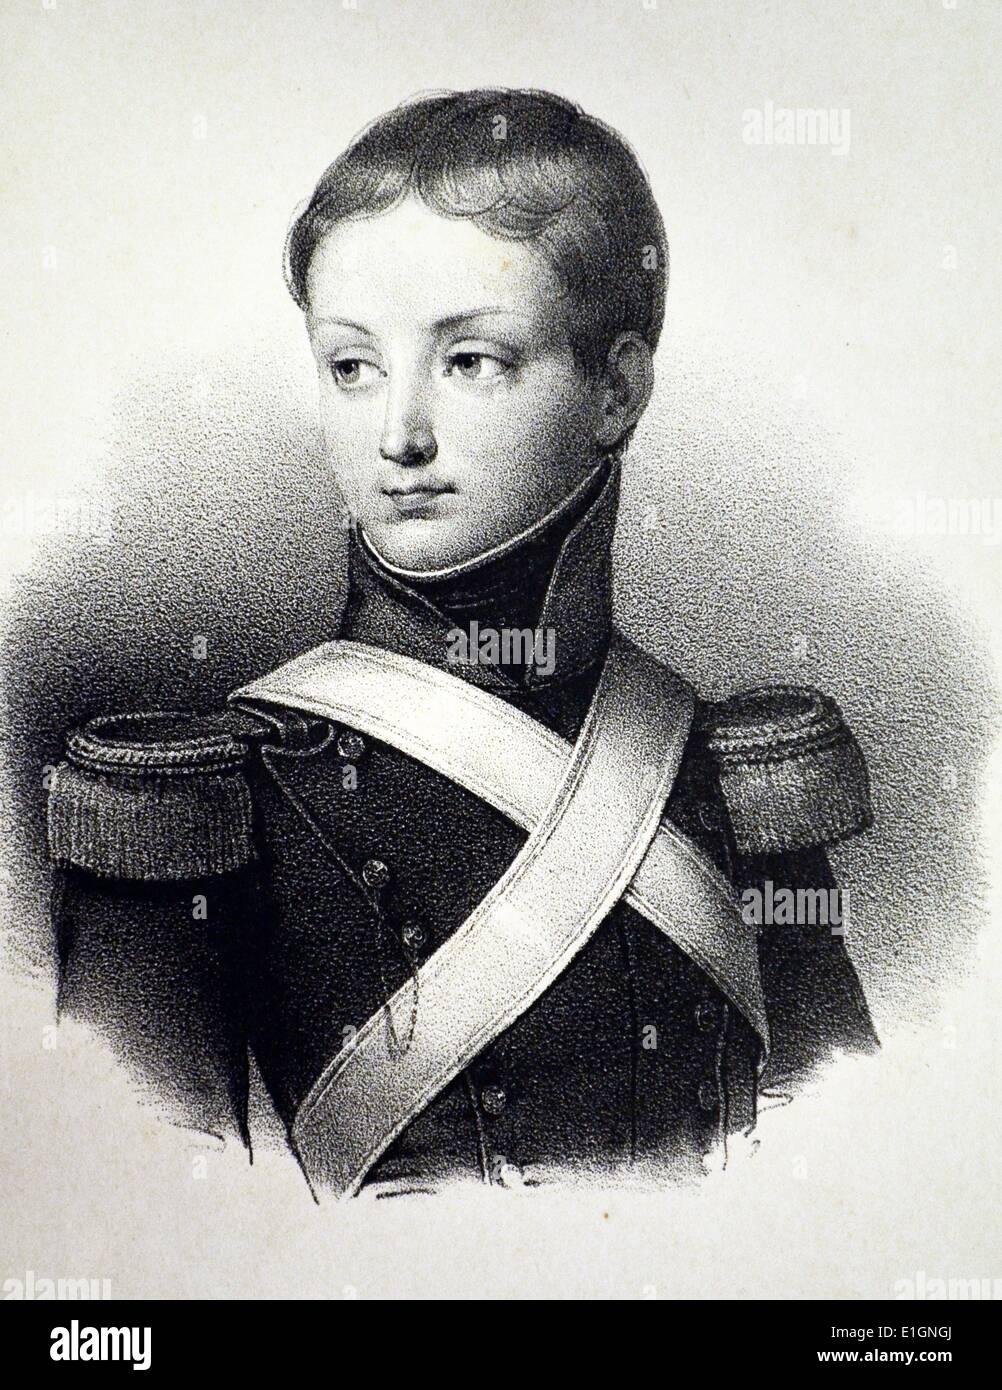 Francois, Prince de Joinville (1818-1900) third son of Louis Philippe I of France.   Lithograph, Paris, c1840. Stock Photo